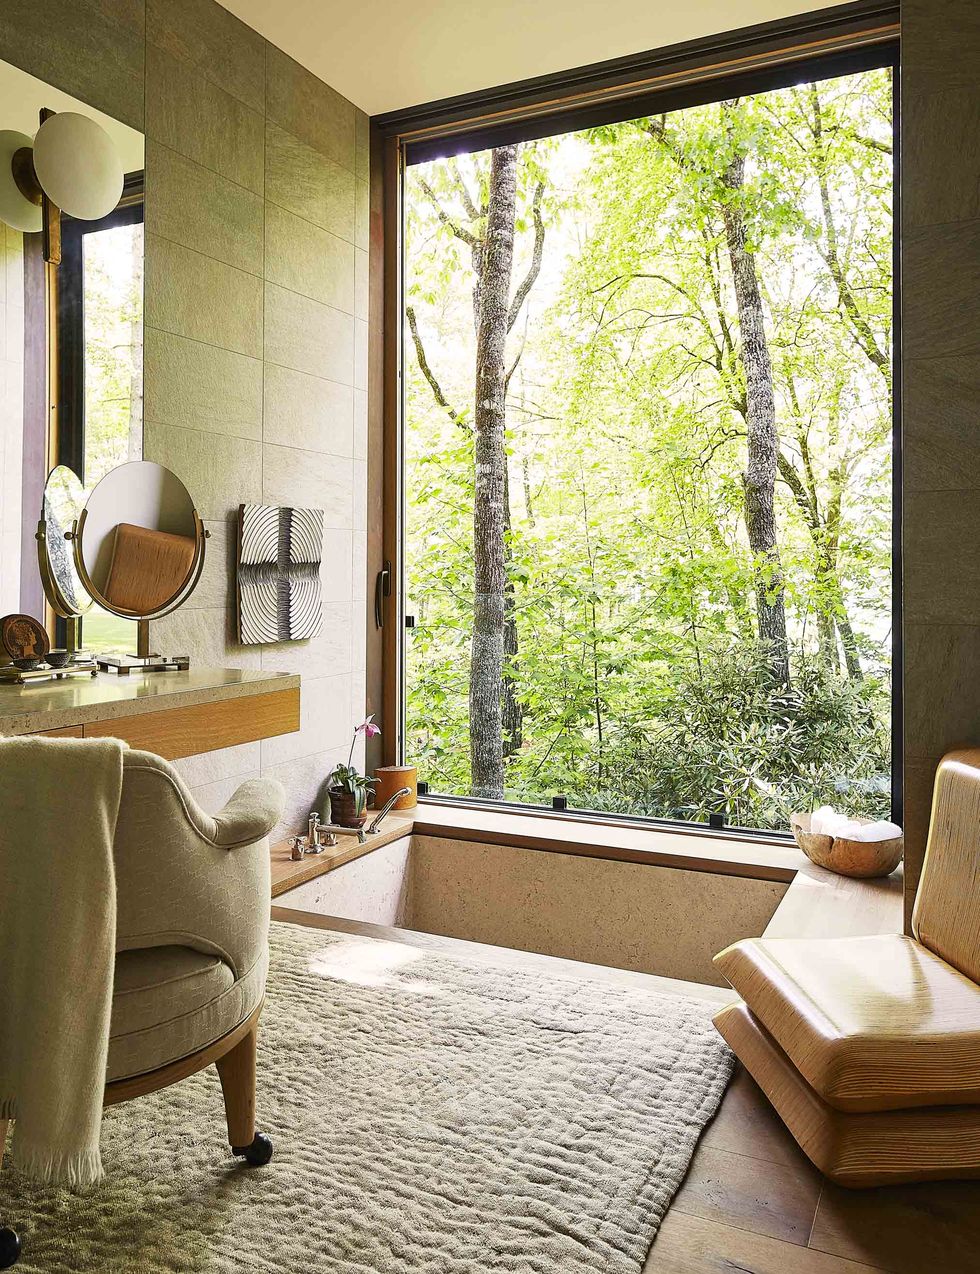 bathroom with sunken tub and window overlooking wooded area